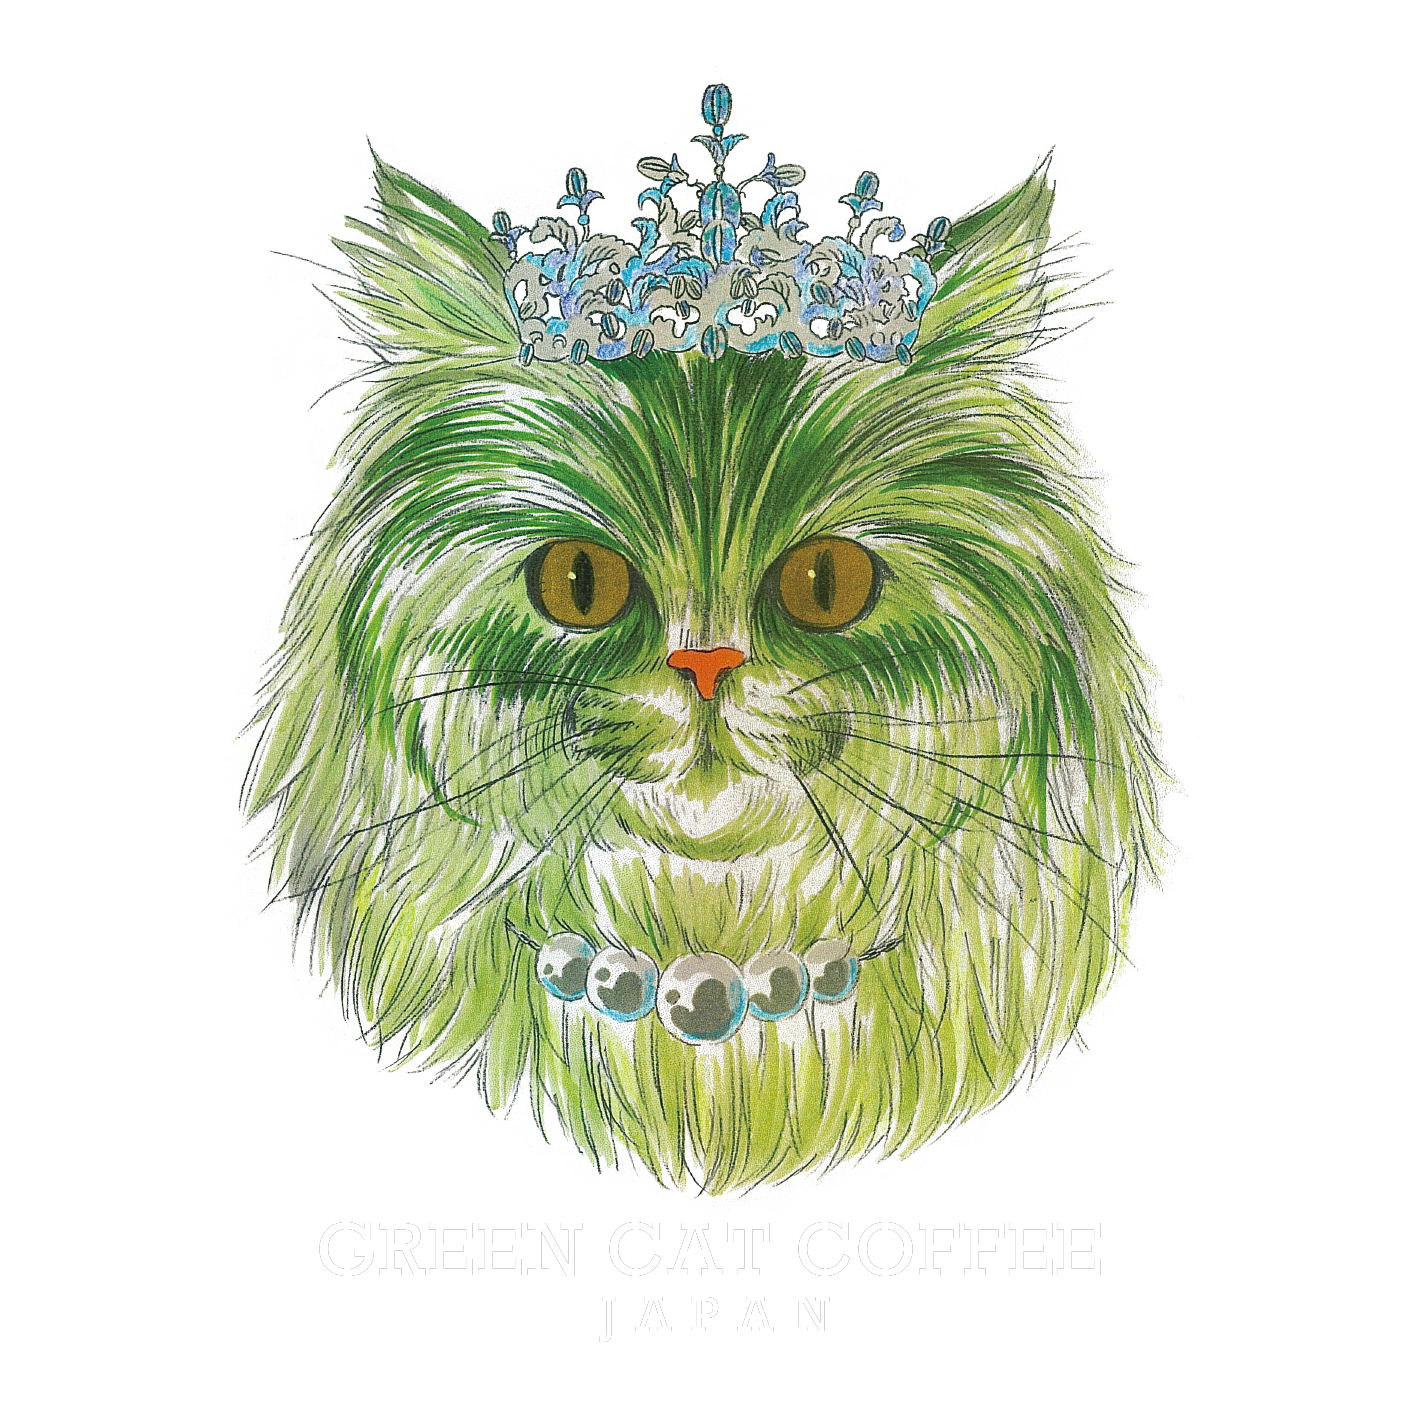 GREEN CAT COFFEE